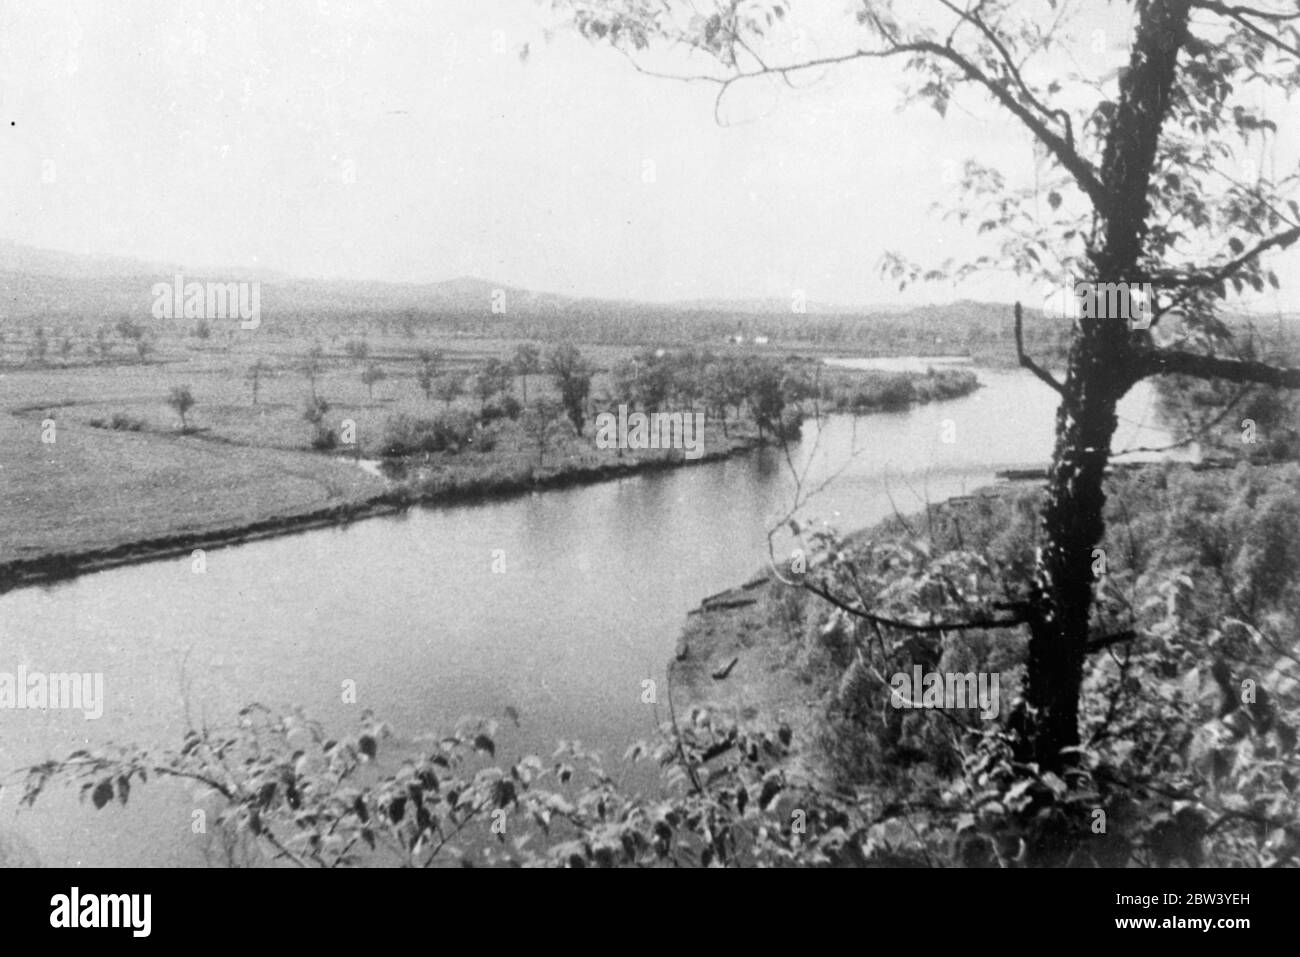 Birobidzhan a town and the administrative center of the Jewish Autonomous Oblast, Russia . Photo shows the river Bira . Stock Photo